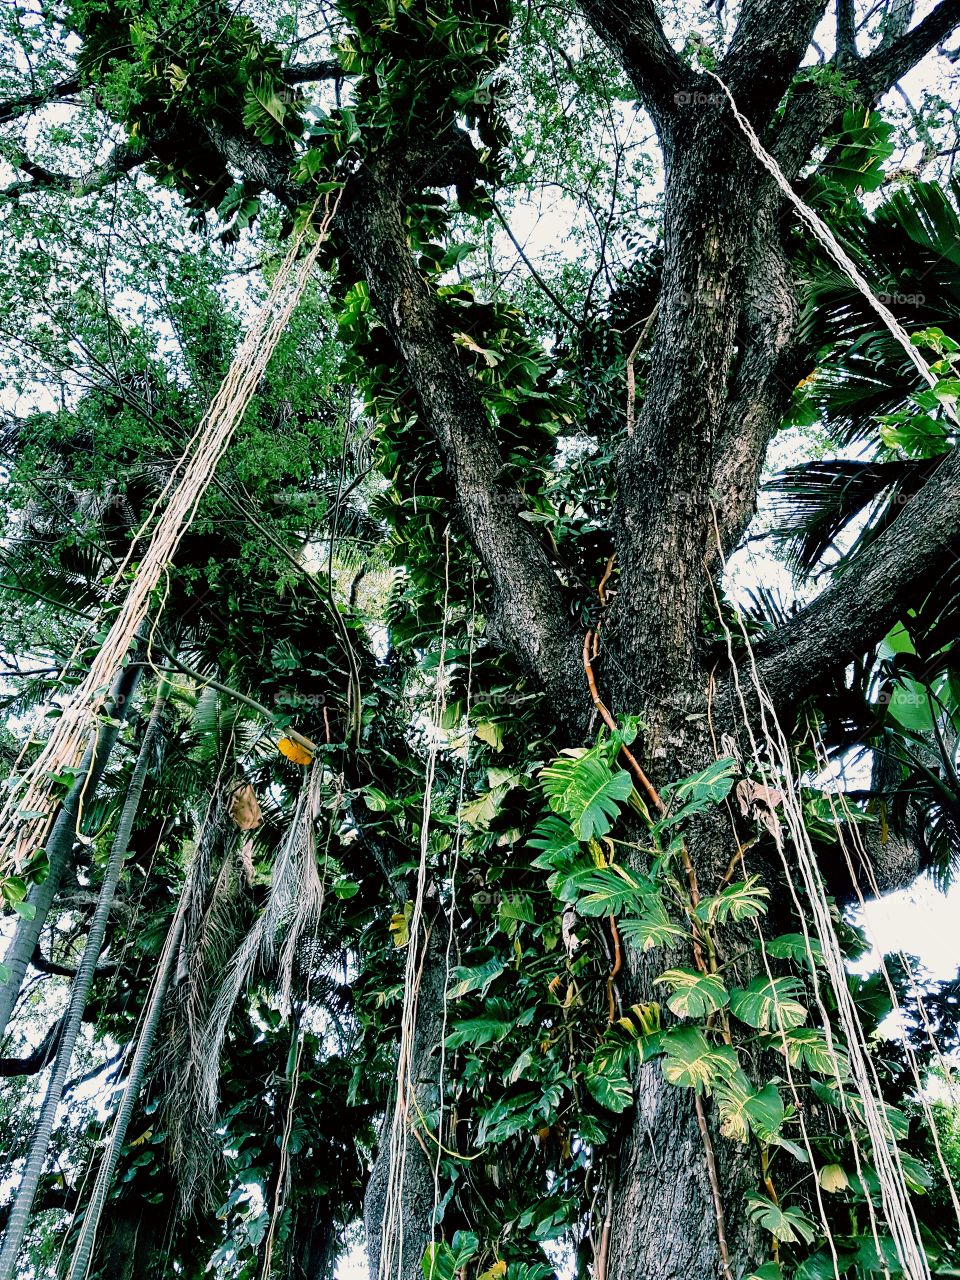 Rainforest view from below